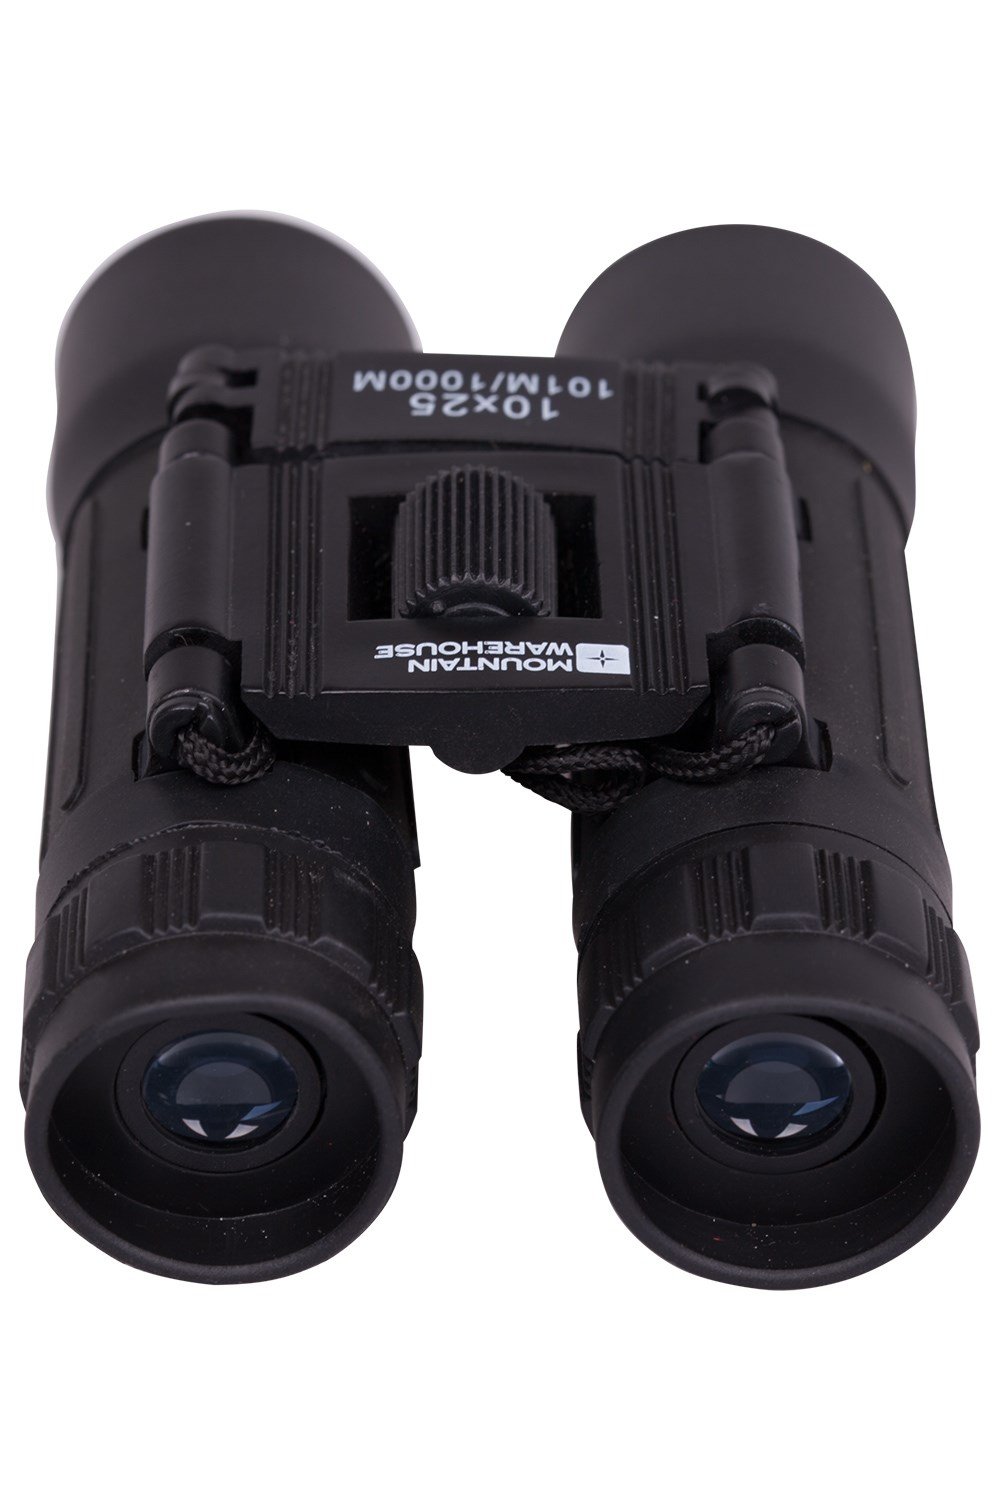 Binoculars - 10 X 25mm - Black